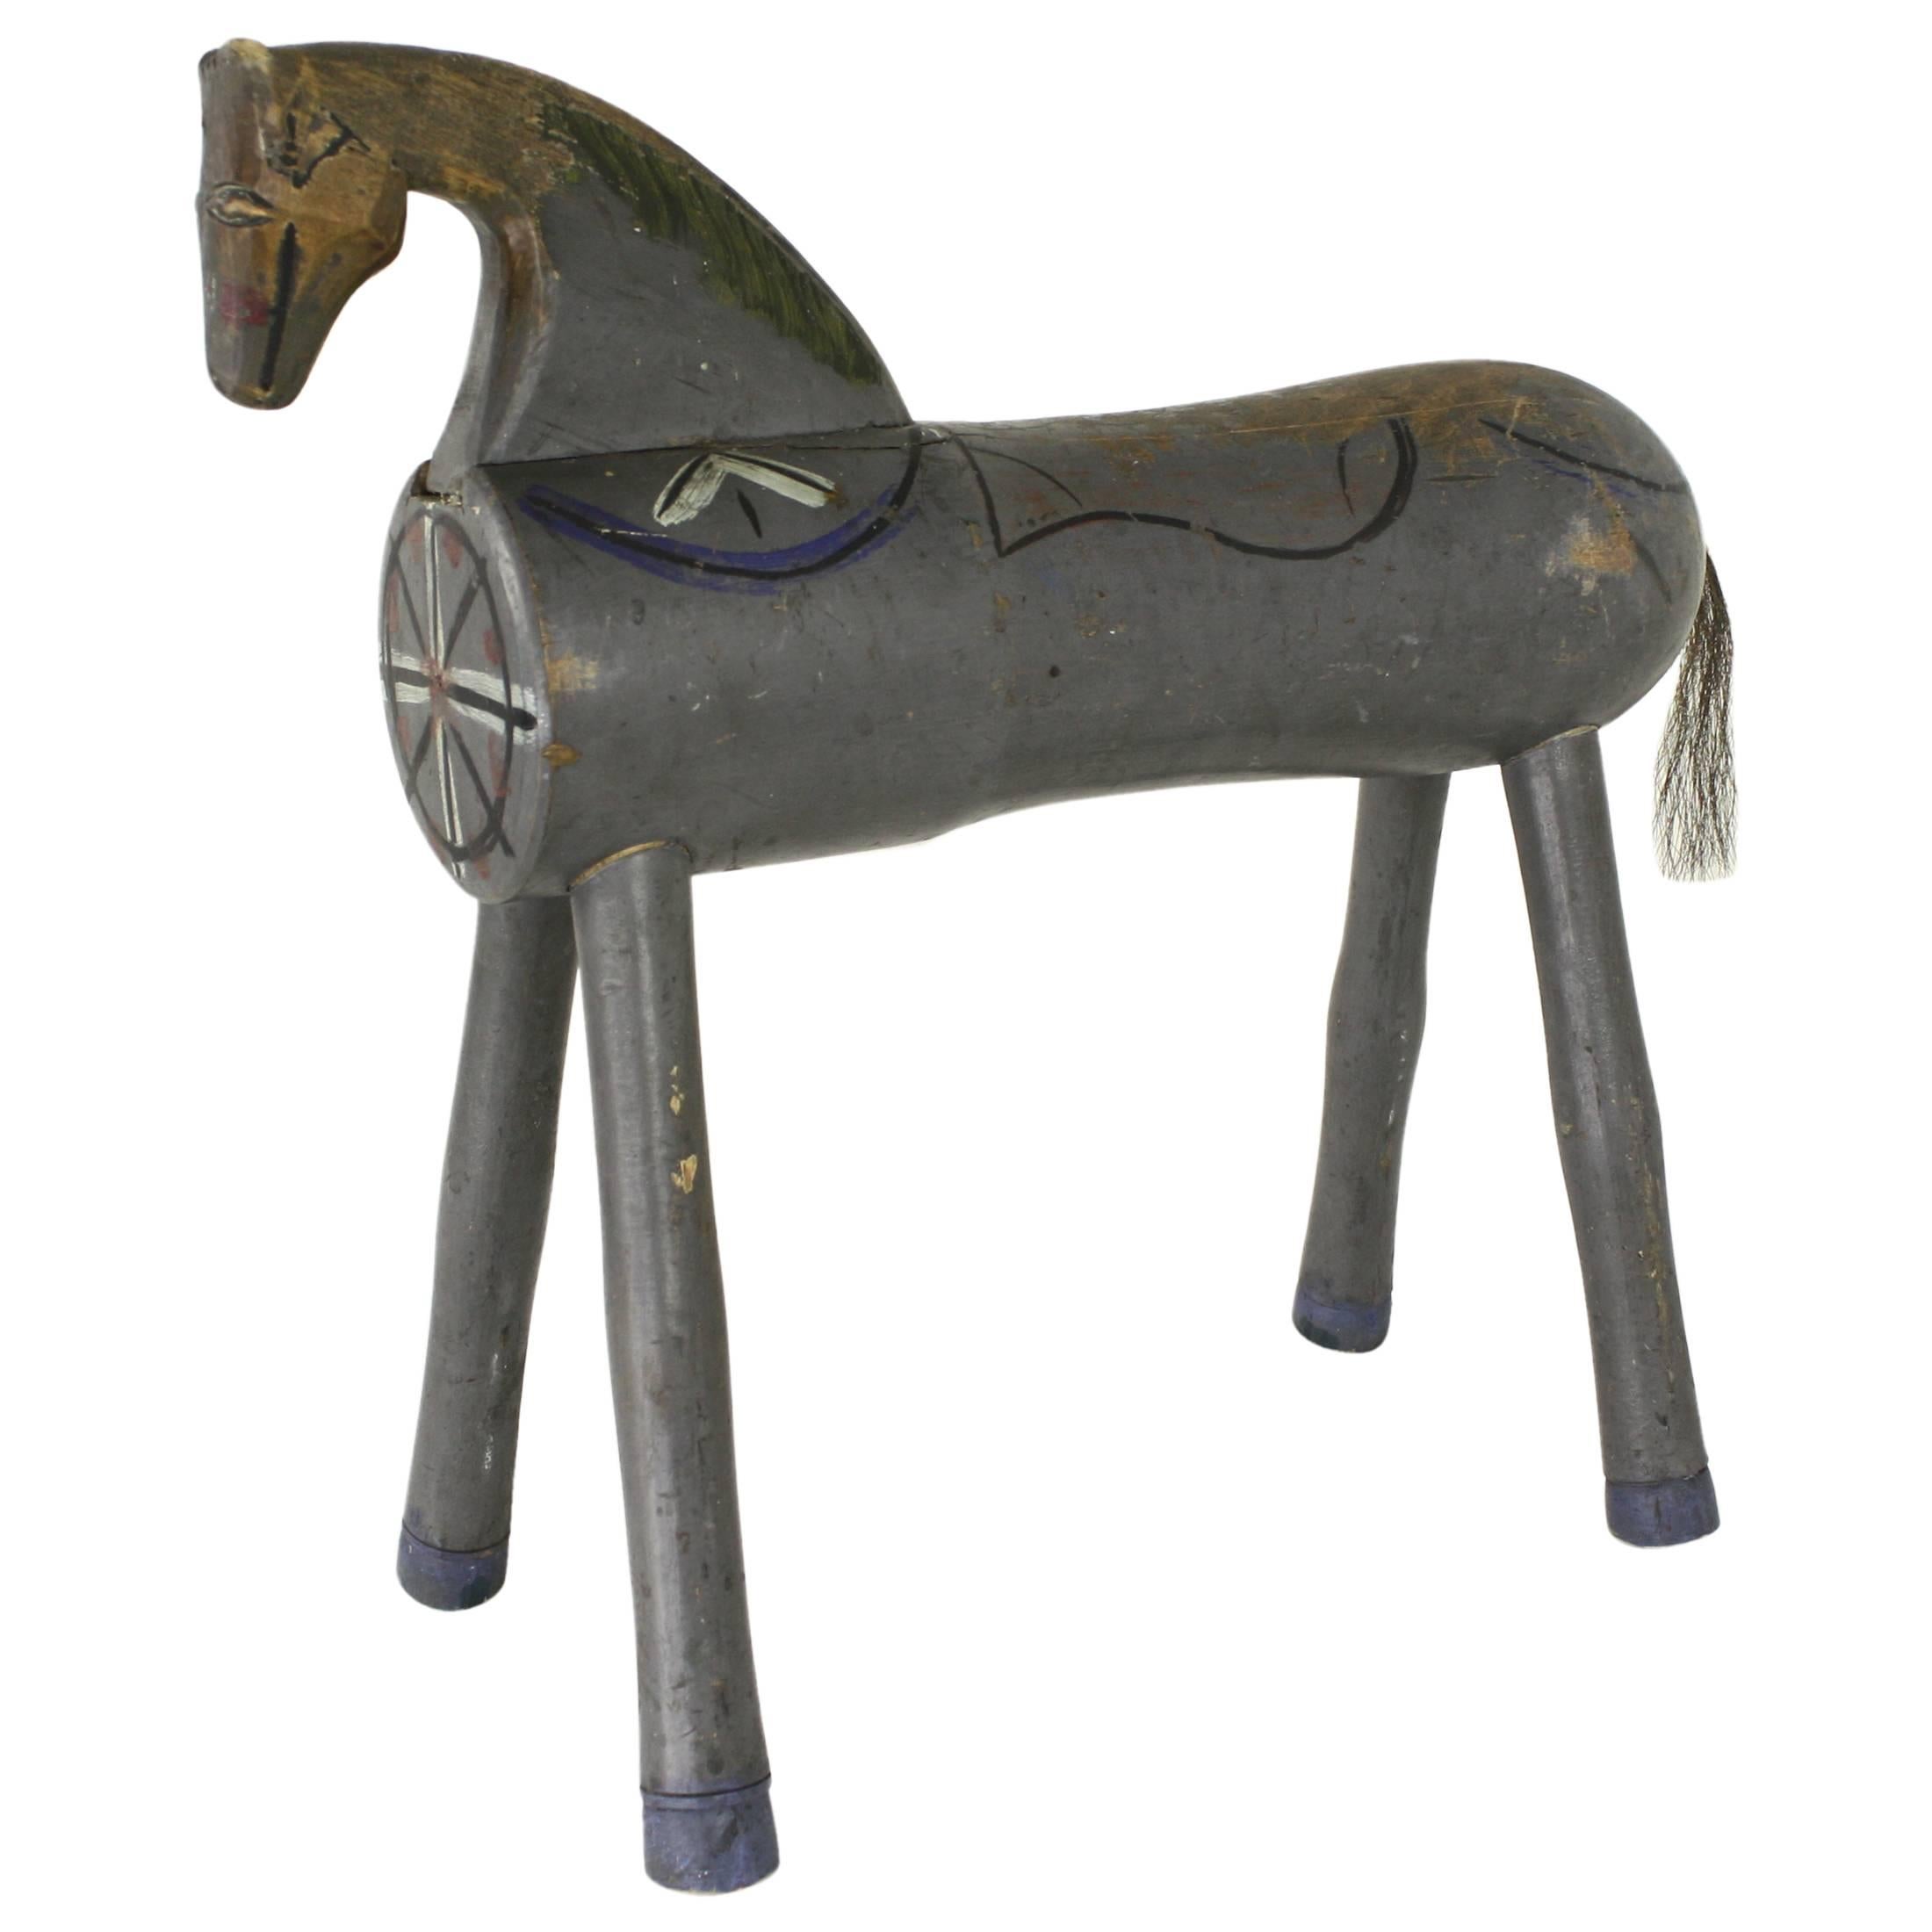 Antique Swedish Wooden Horse, Original Paint